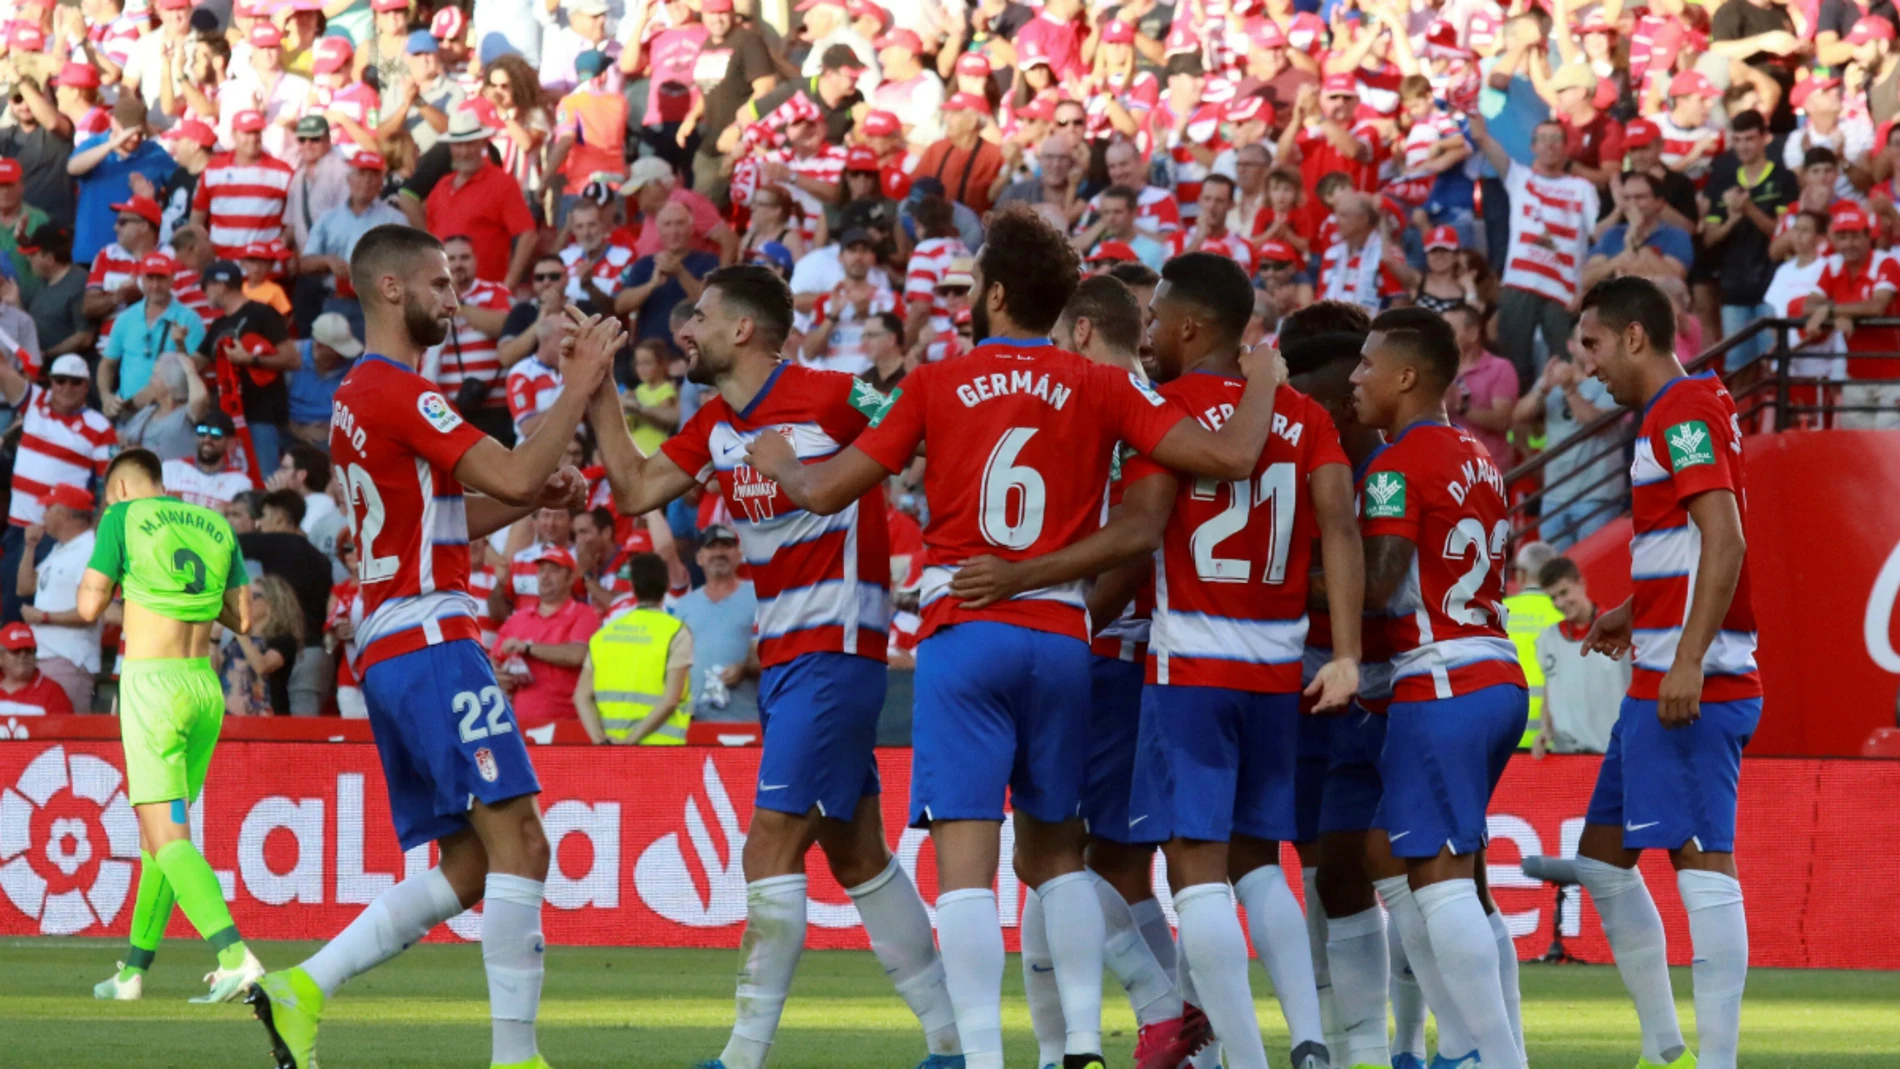 El Granada celebra un gol ante el Leganés